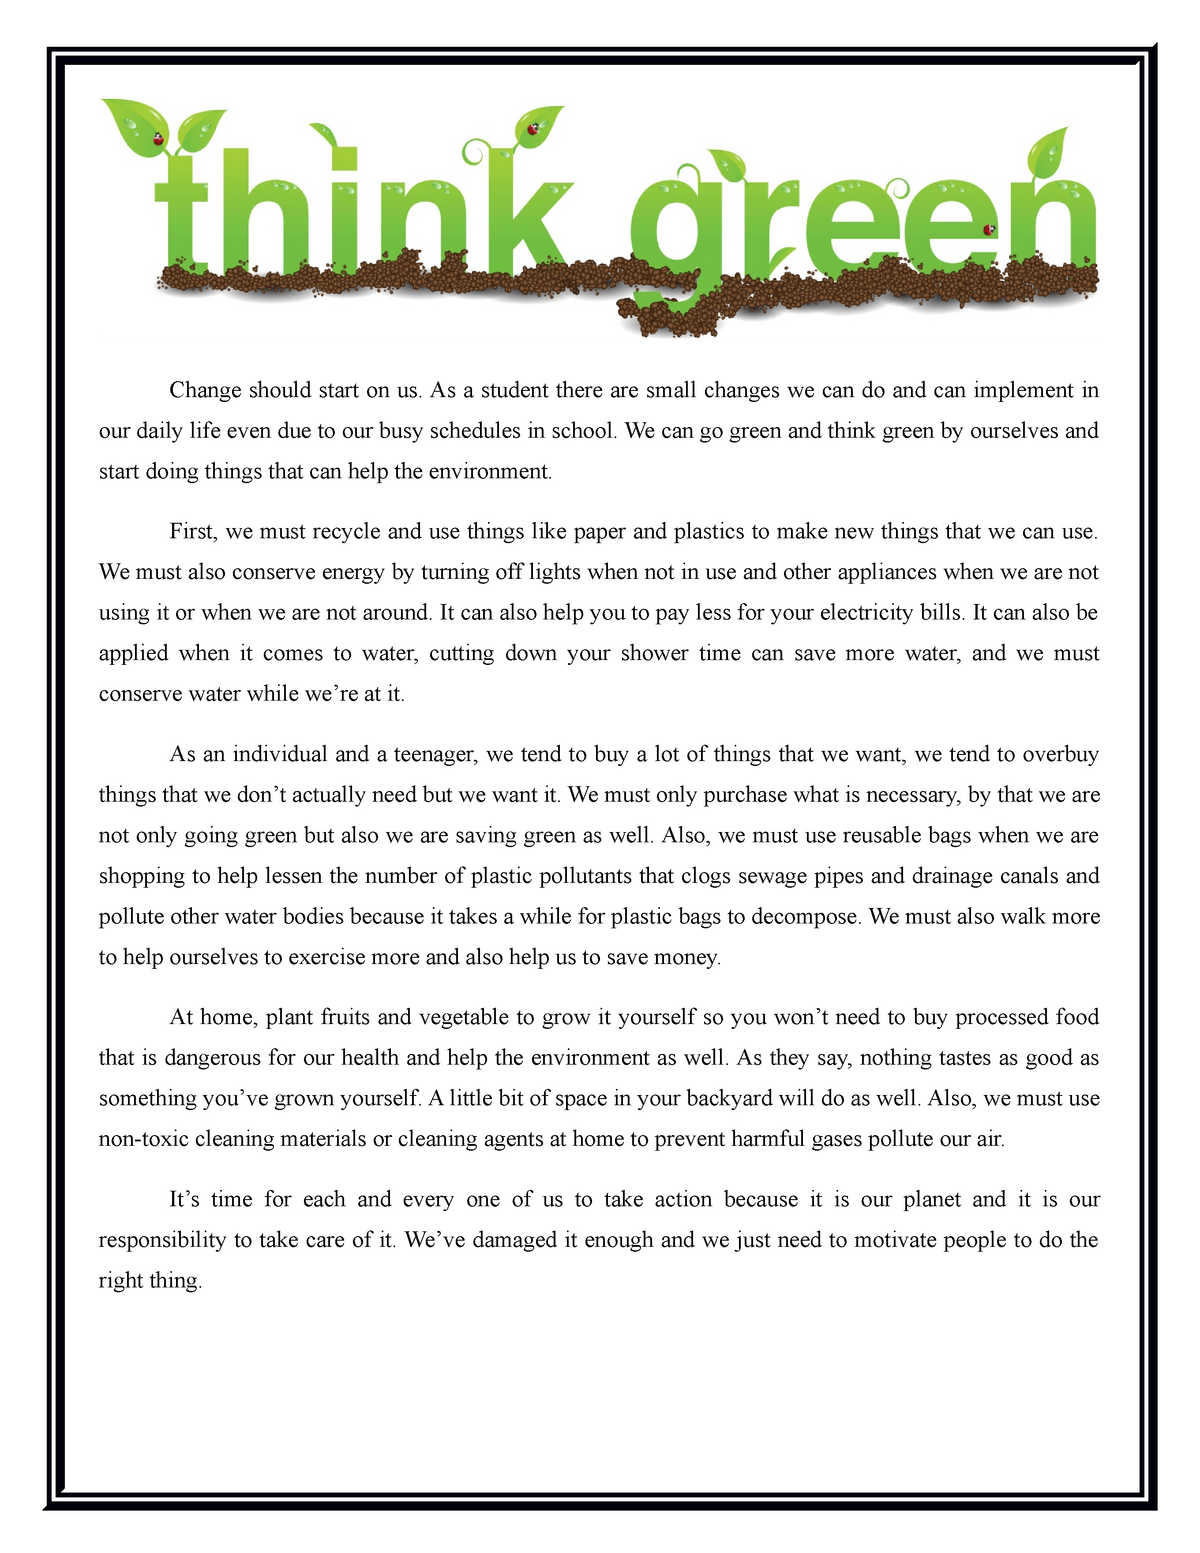 green week essay